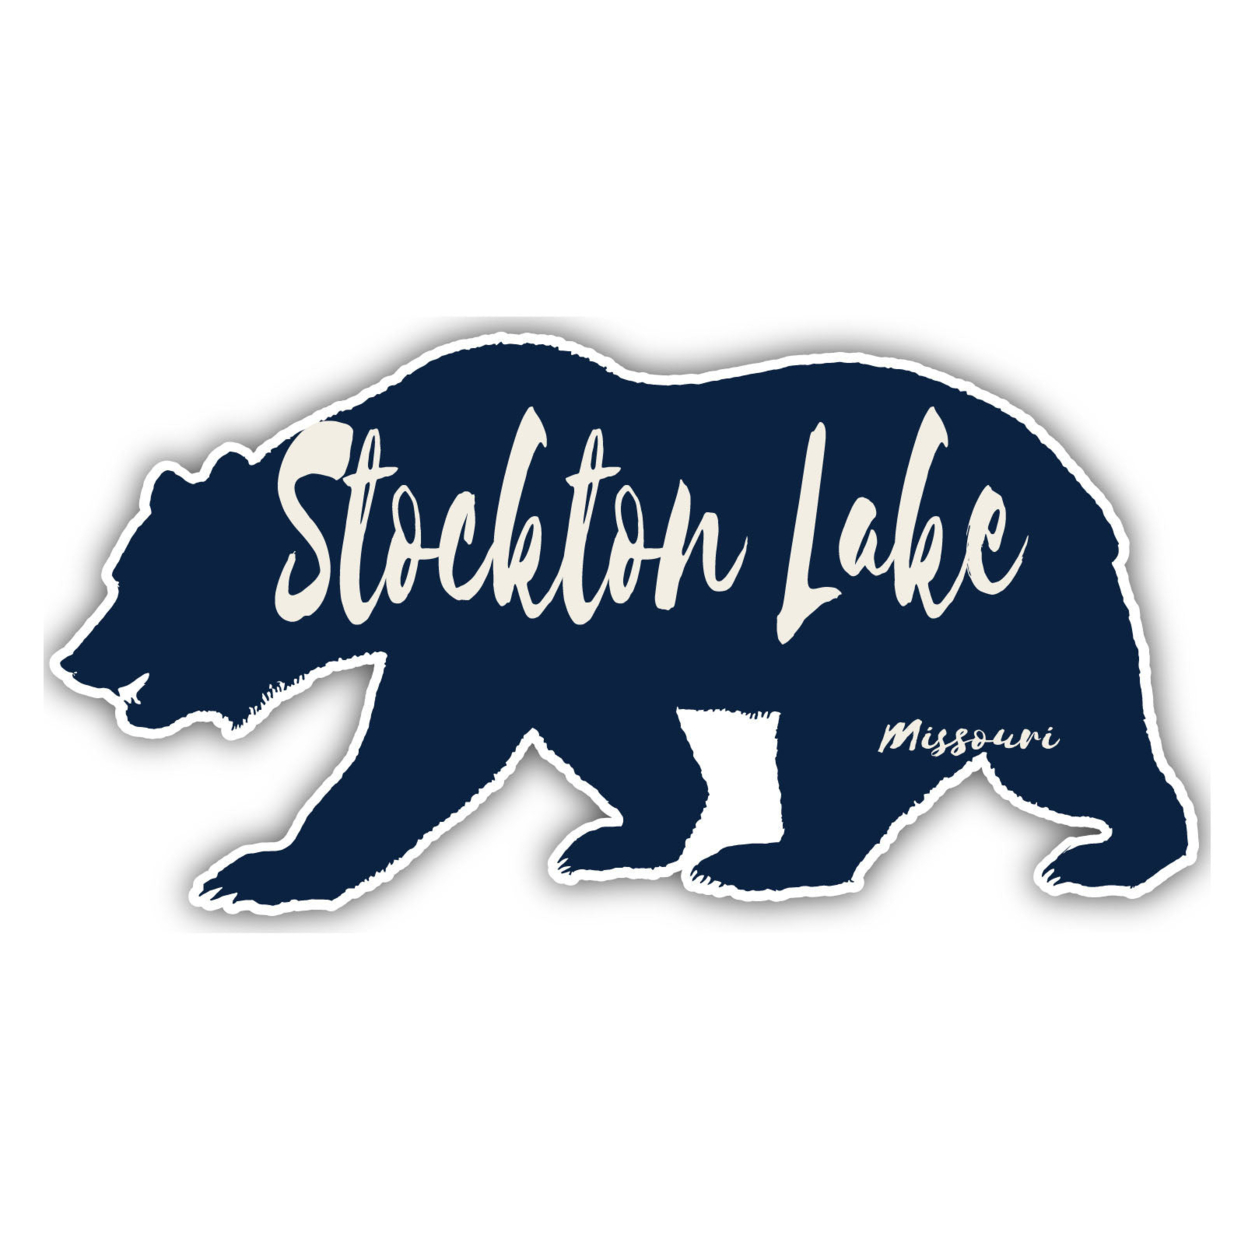 Stockton Lake Missouri Souvenir Decorative Stickers (Choose Theme And Size) - Single Unit, 2-Inch, Bear